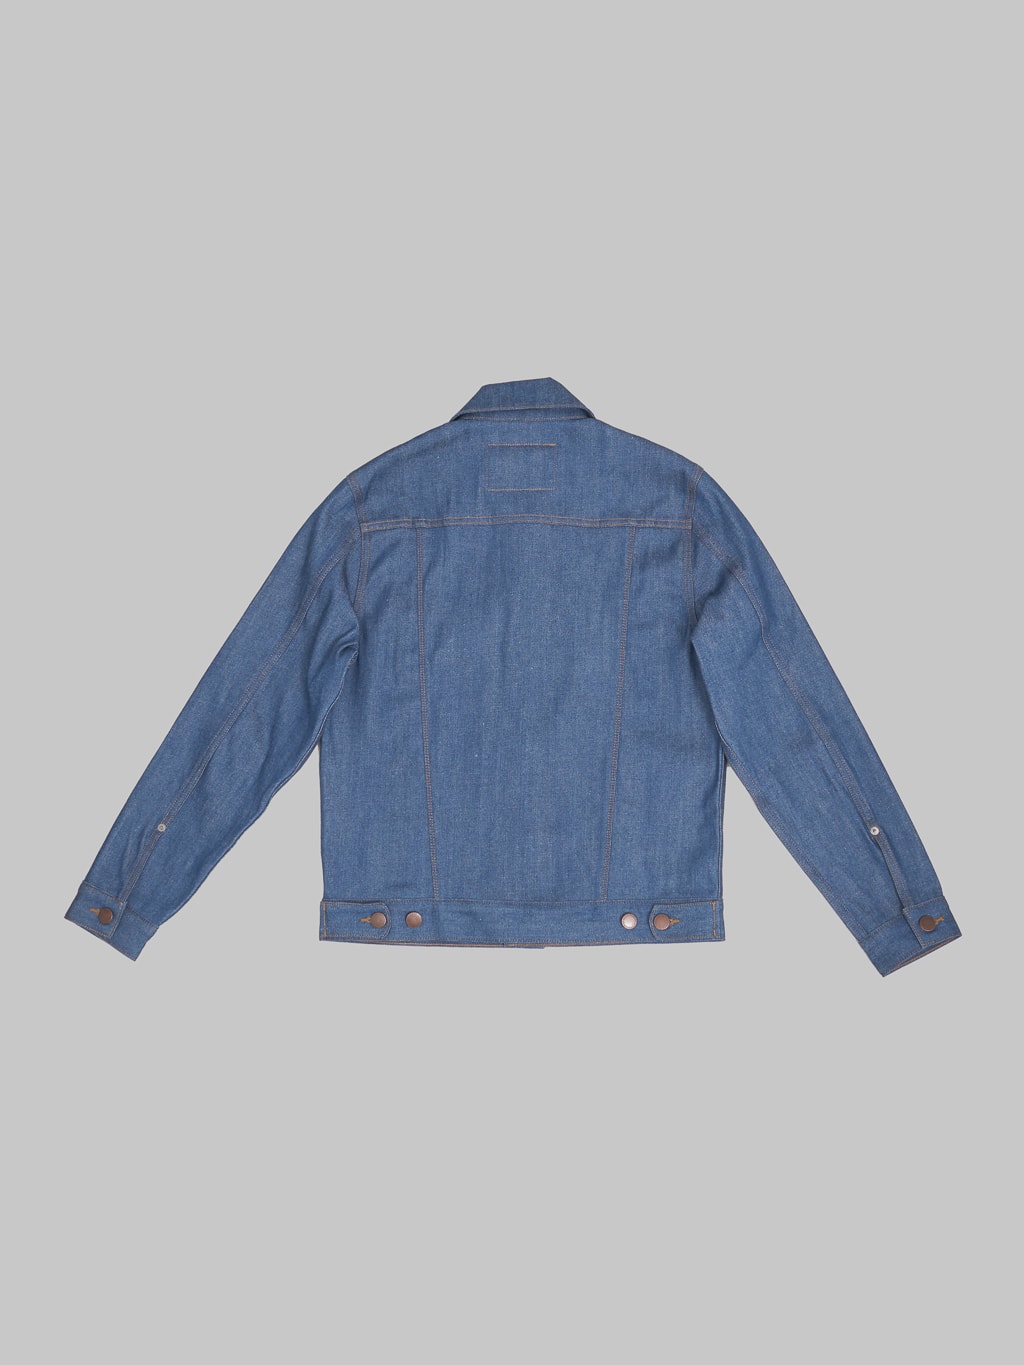 freenote cloth classic denim jacket vintage blue denim back